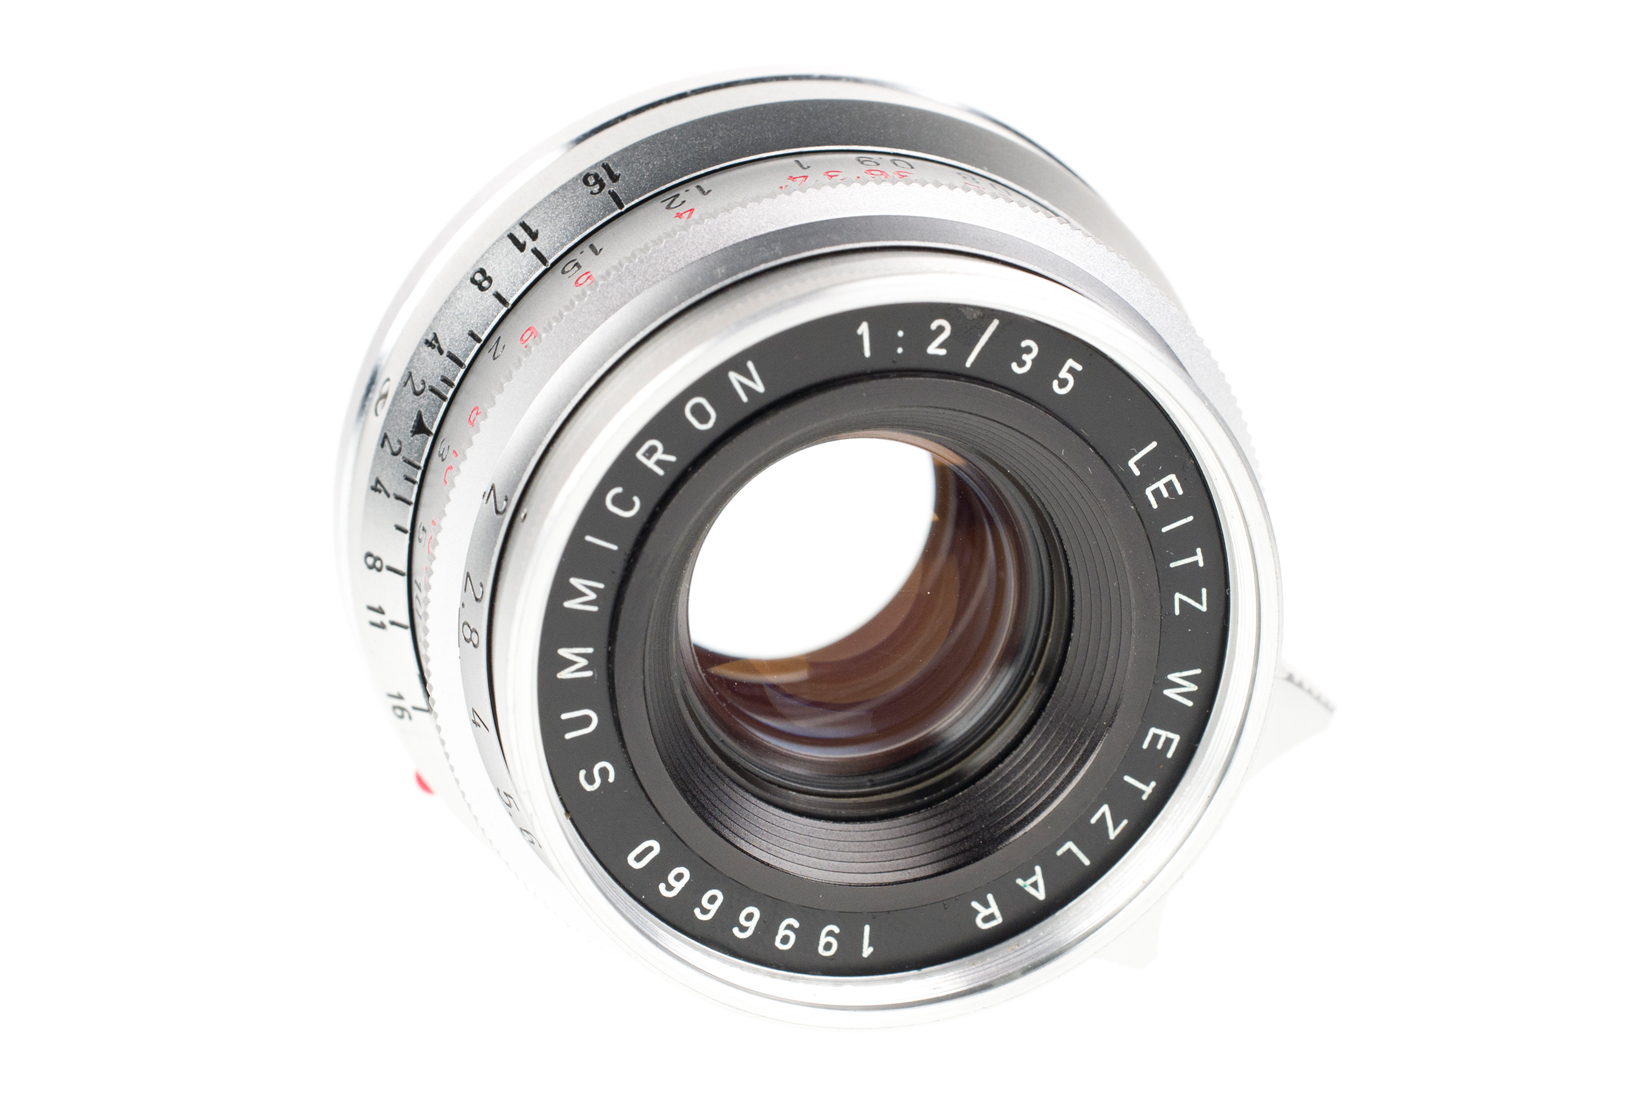 Leica Summicron-M 1:2/35mm 8-elements